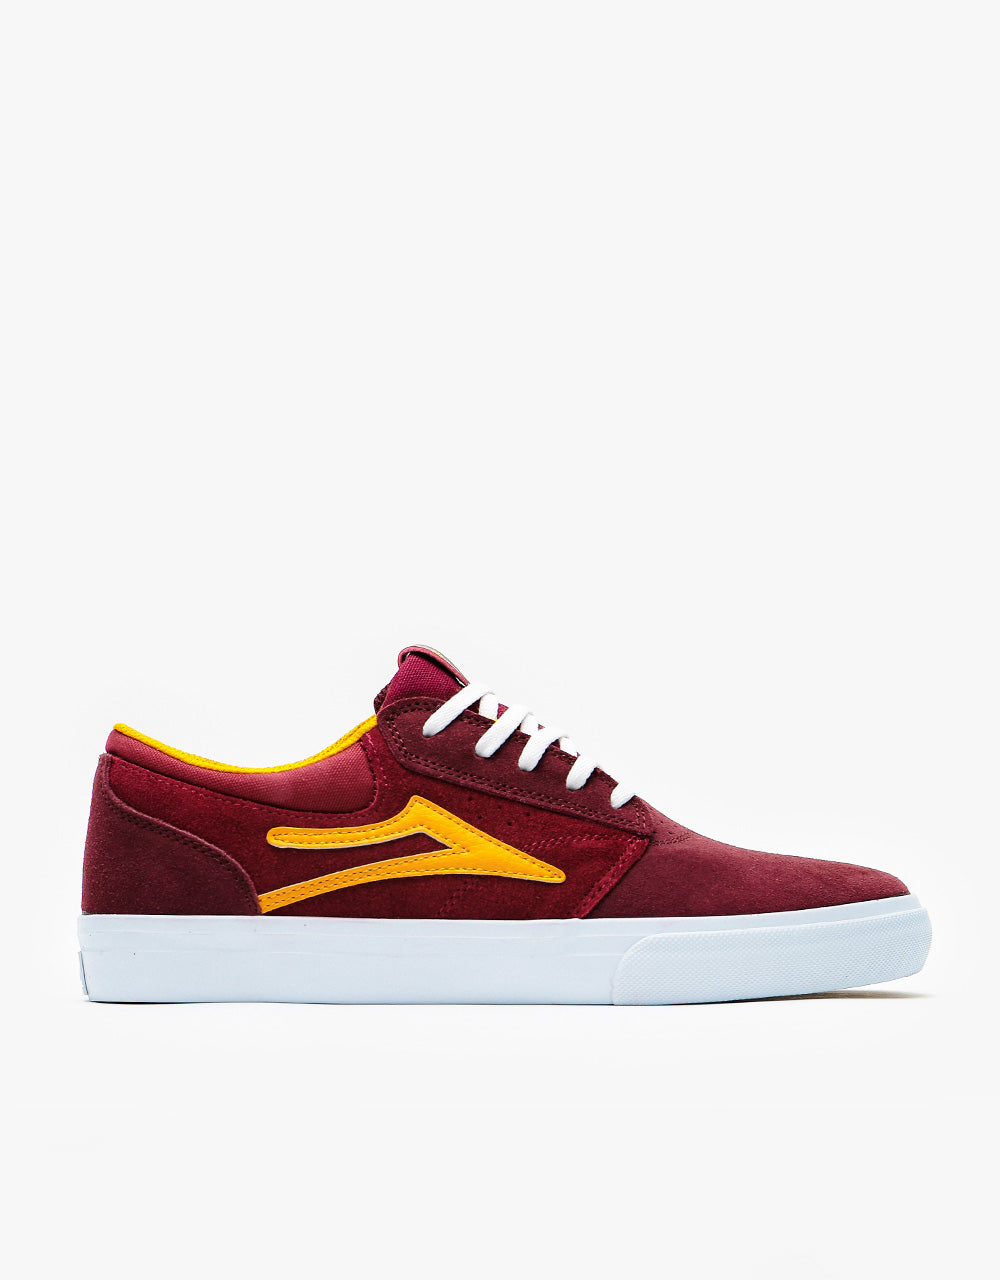 Lakai Griffin Skate Shoes - Burgundy/Cardinal Suede